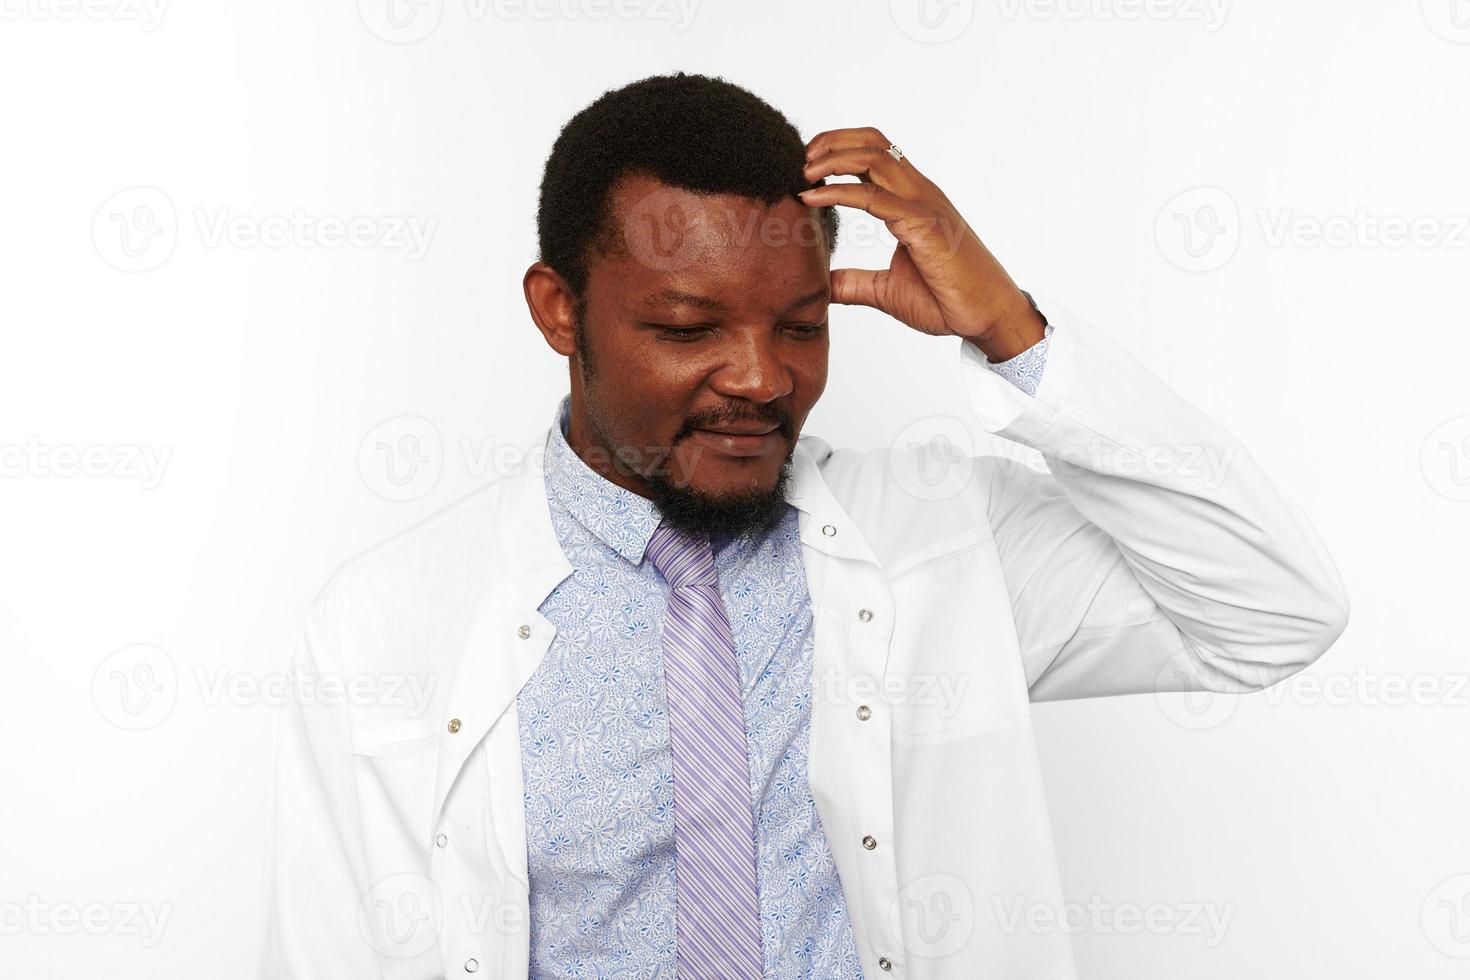 médico preto confuso com barba pequena na camisa brilhante de roupão branco isolado no fundo branco foto